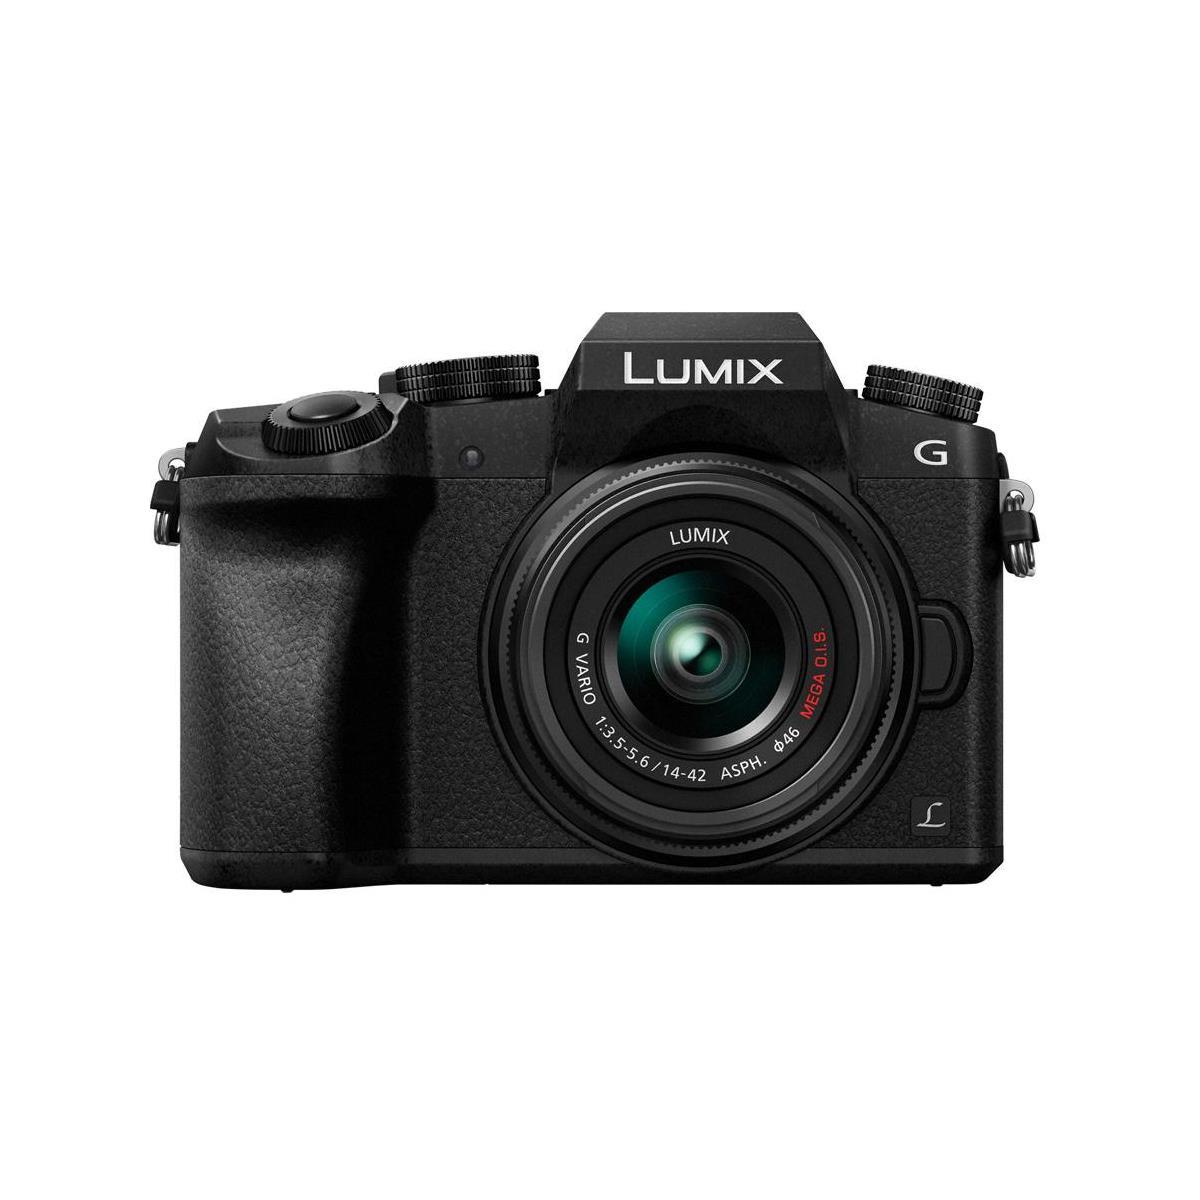 Image of Panasonic Lumix DMC-G7 Mirrorless with 14-42mm Lens